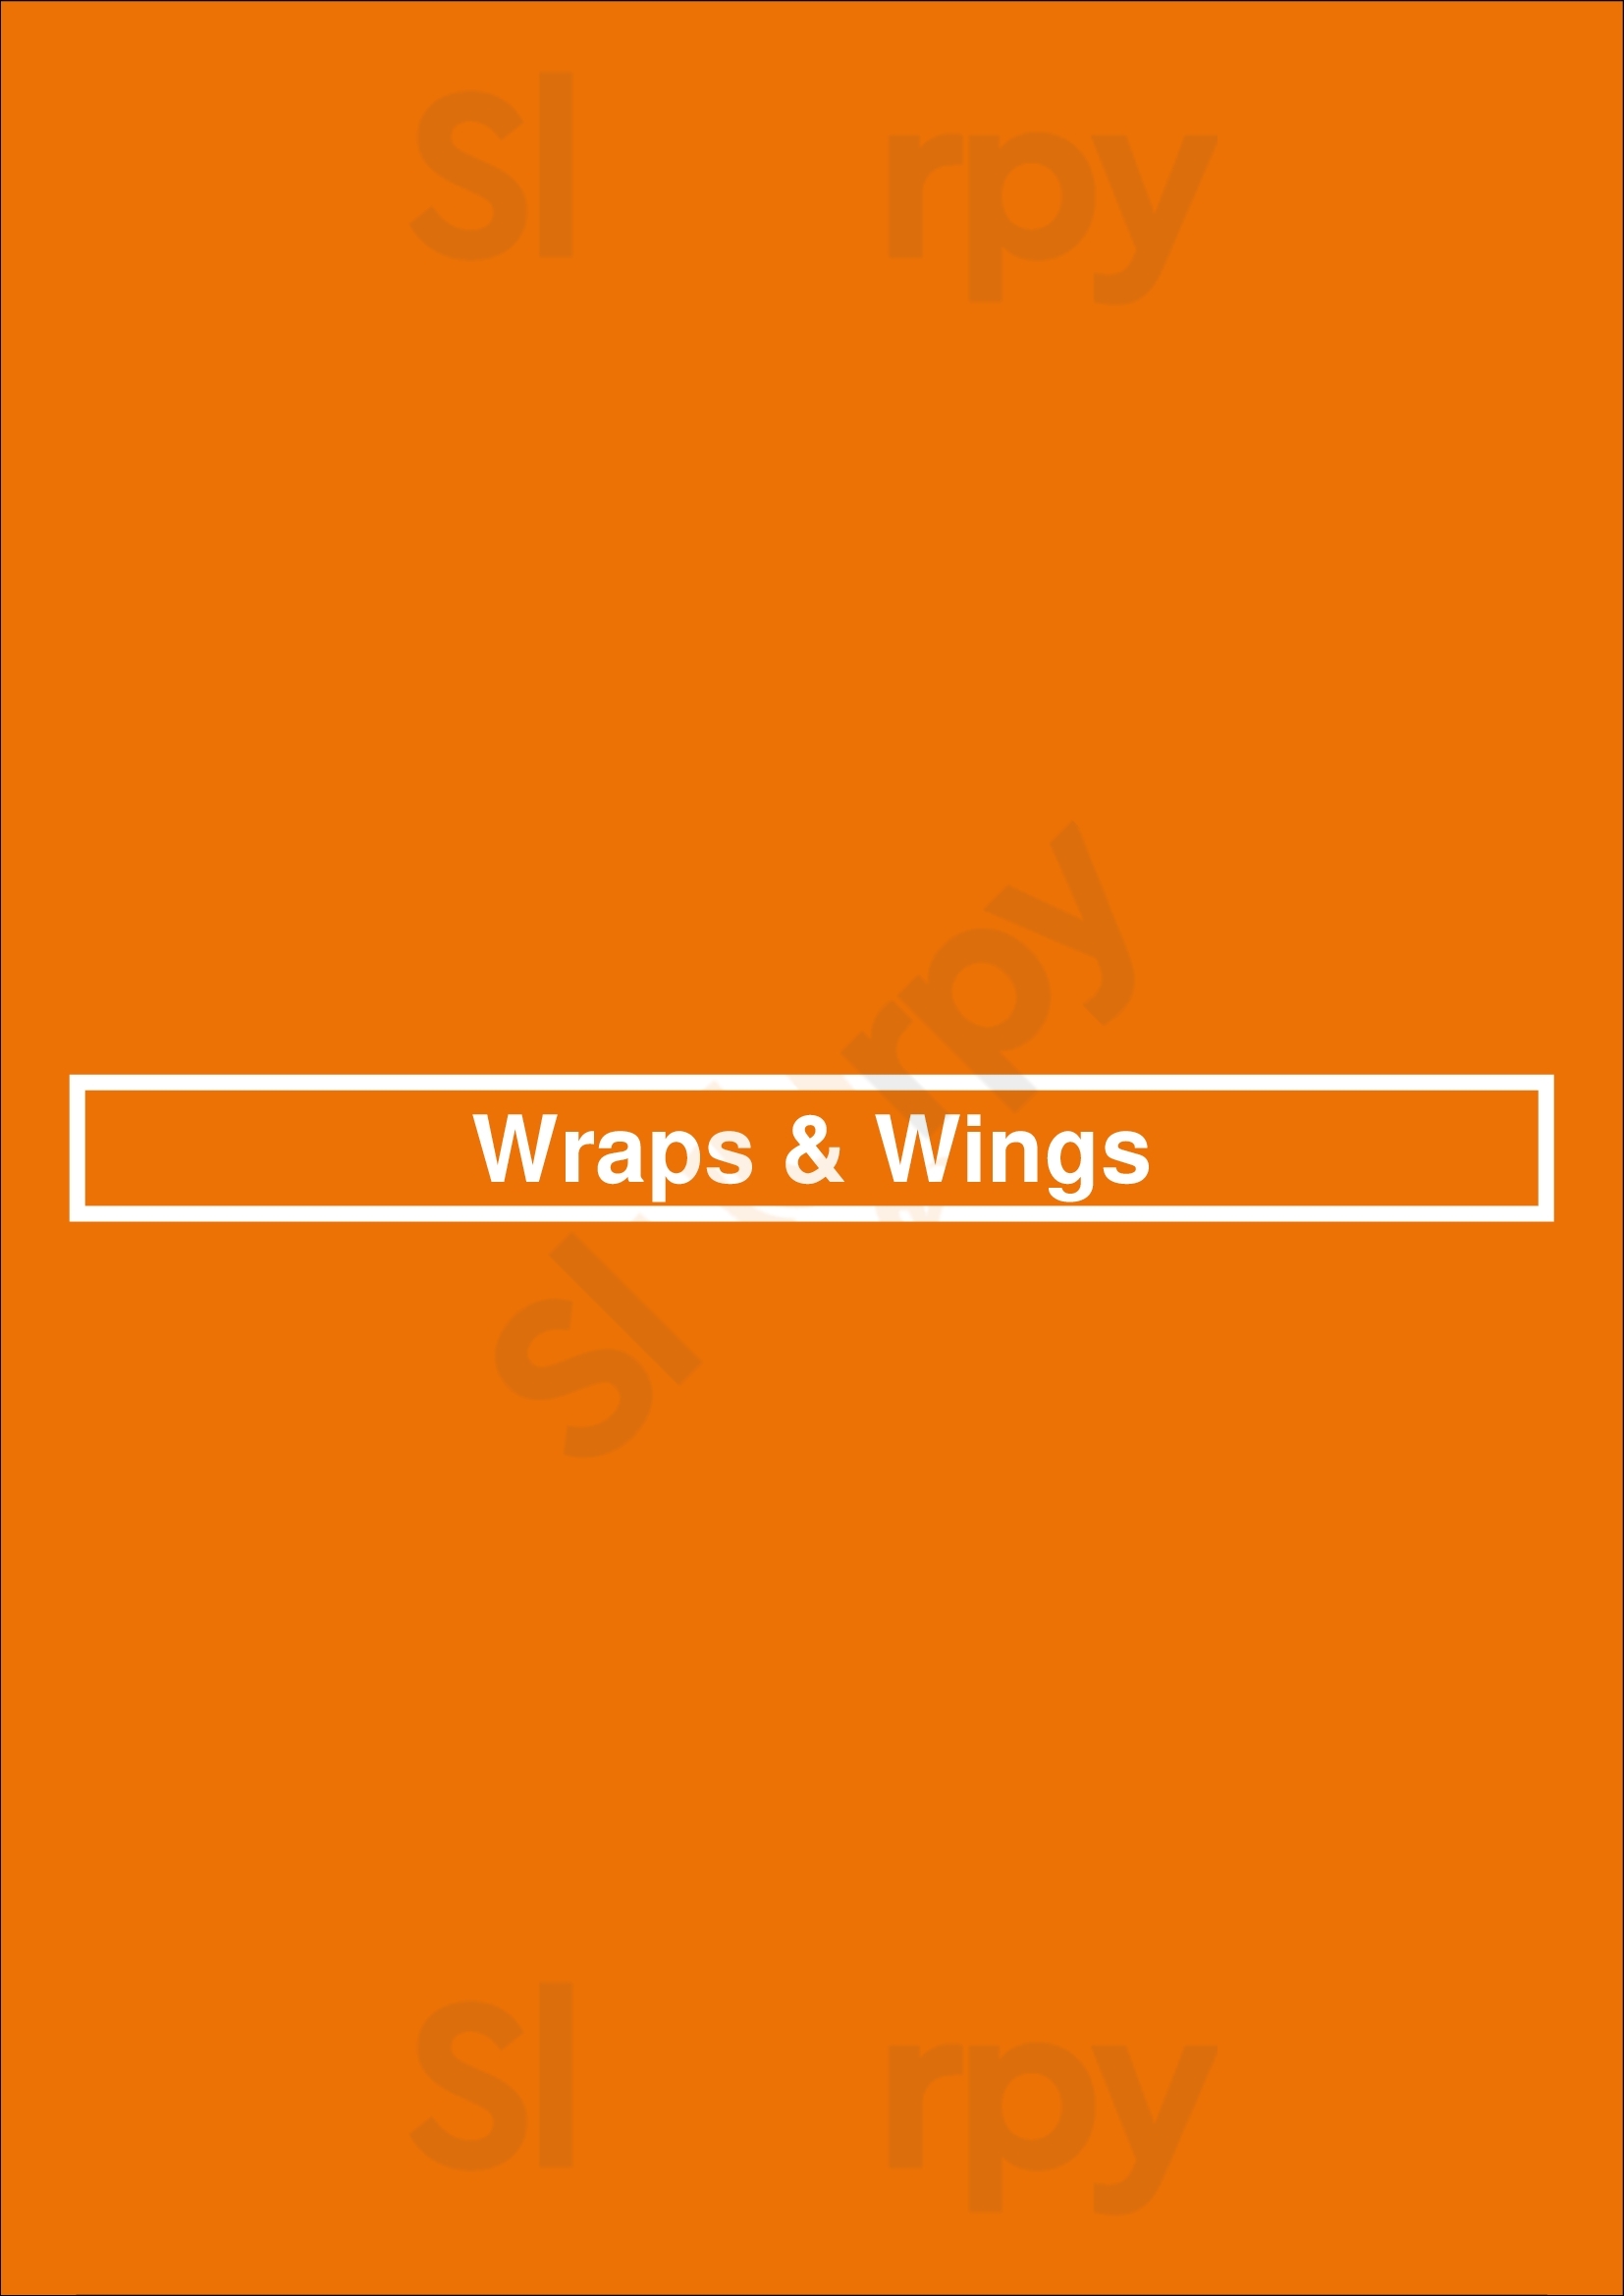 Wraps & Wings London Menu - 1